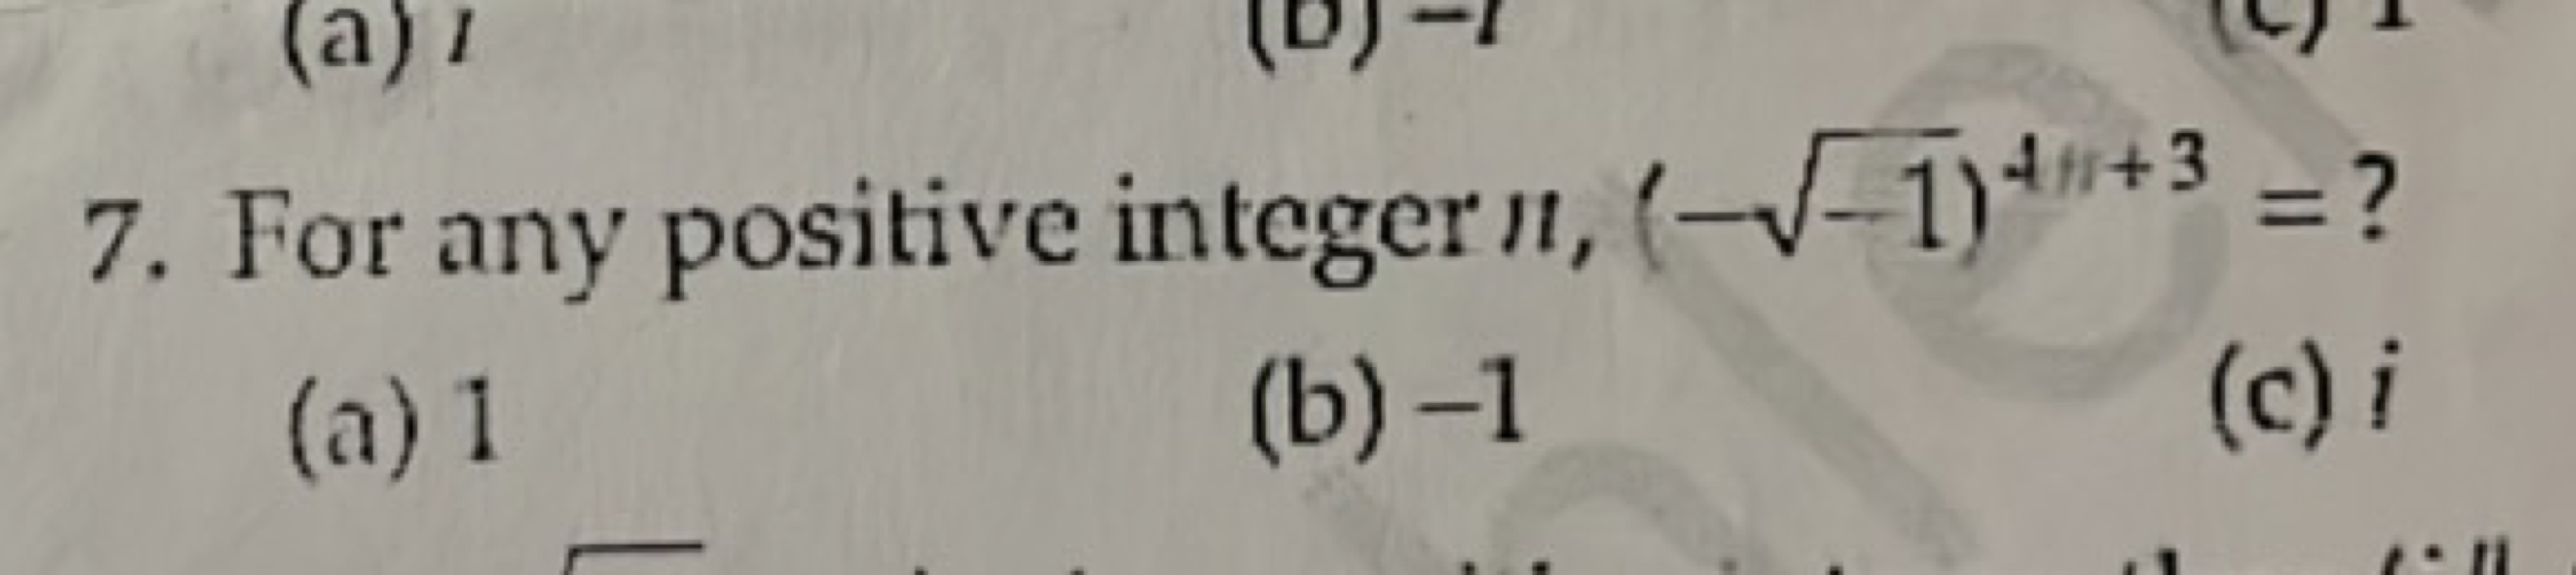 7. For any positive integer n,(−−1​)4n+3= ?
(a) 1
(b) -1
(c) i
